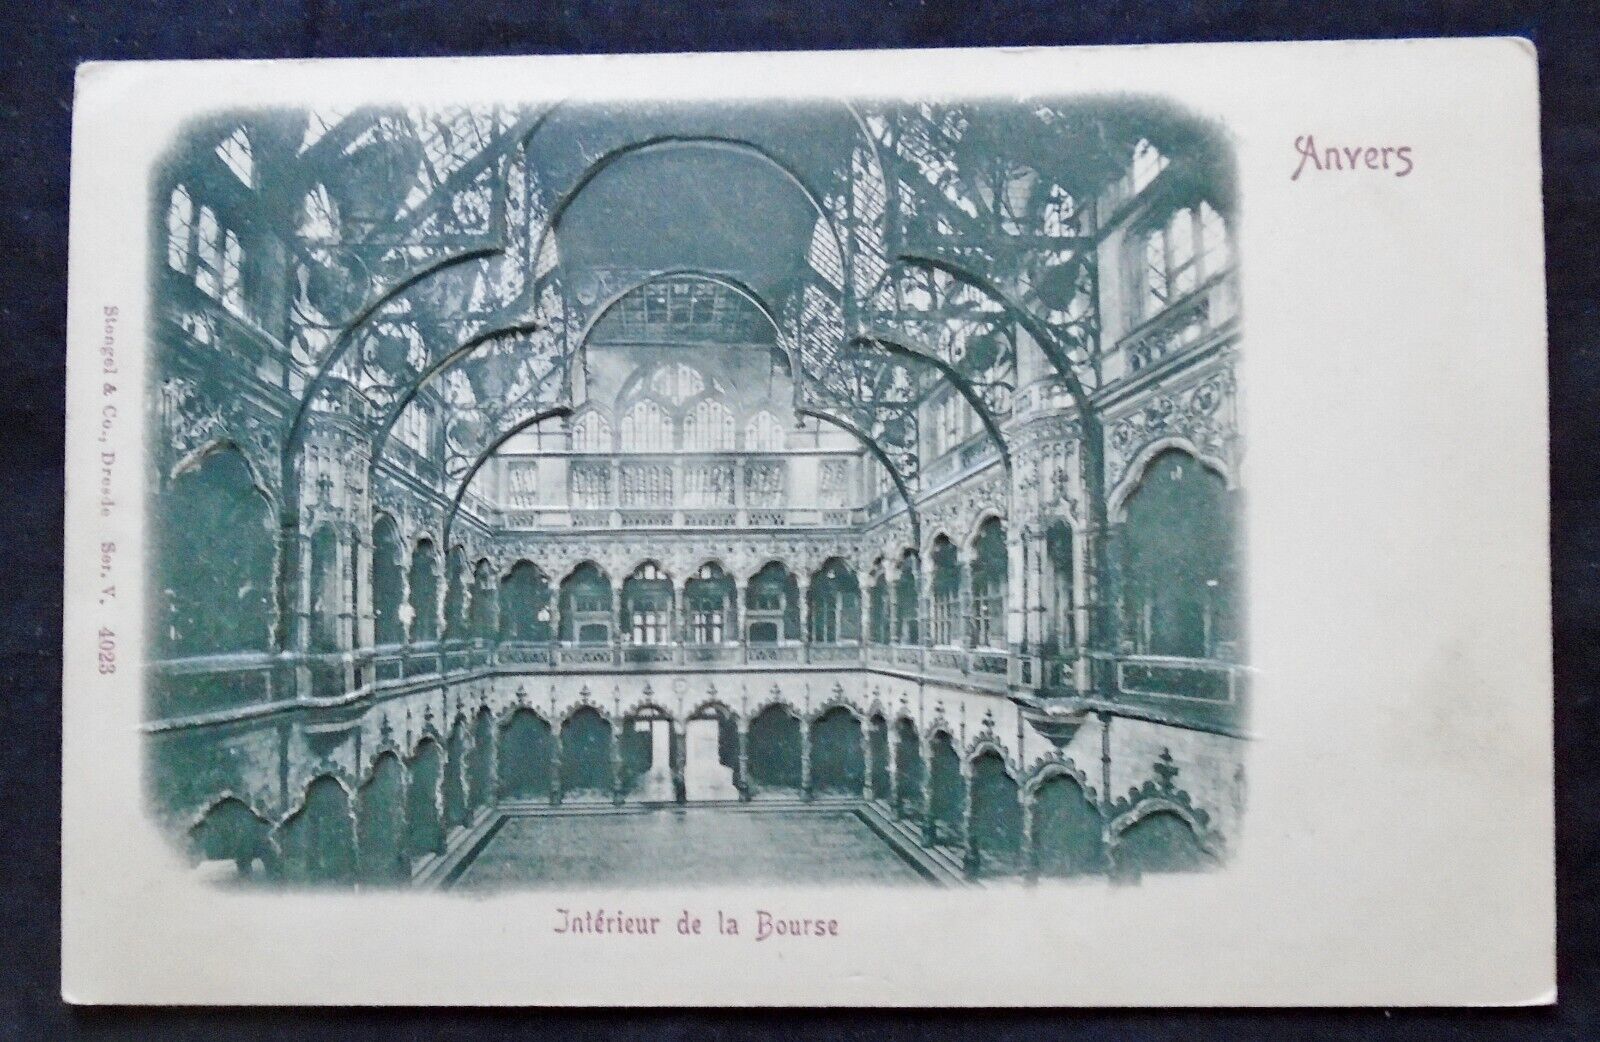 Anvers, Belgium, Interieur de la Bourse, embossed, undivided back, circa 1900